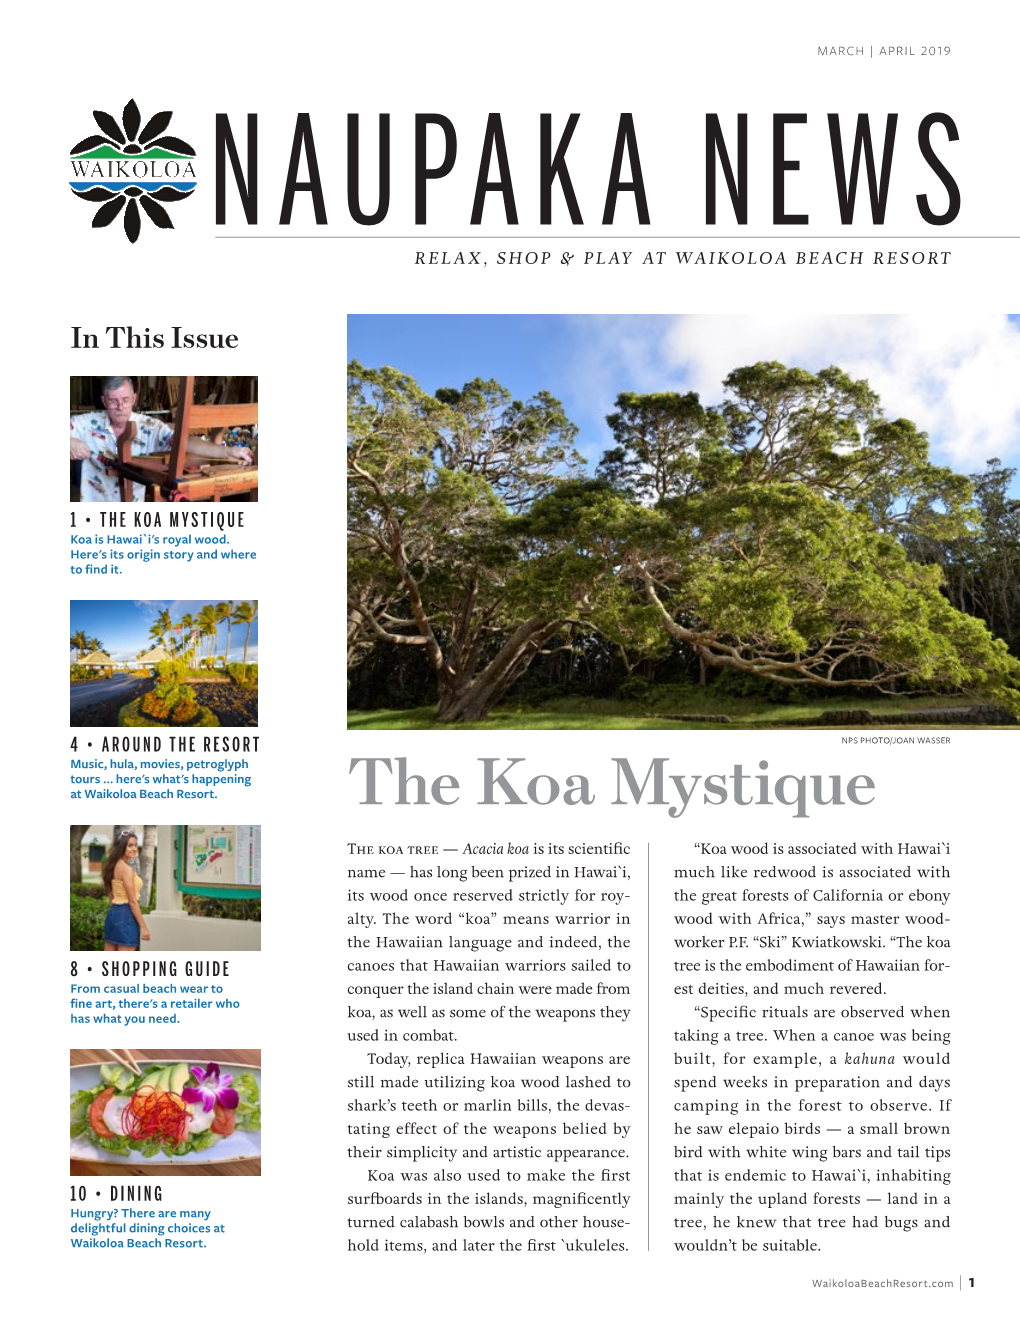 THE KOA MYSTIQUE Koa Is Hawai`I's Royal Wood